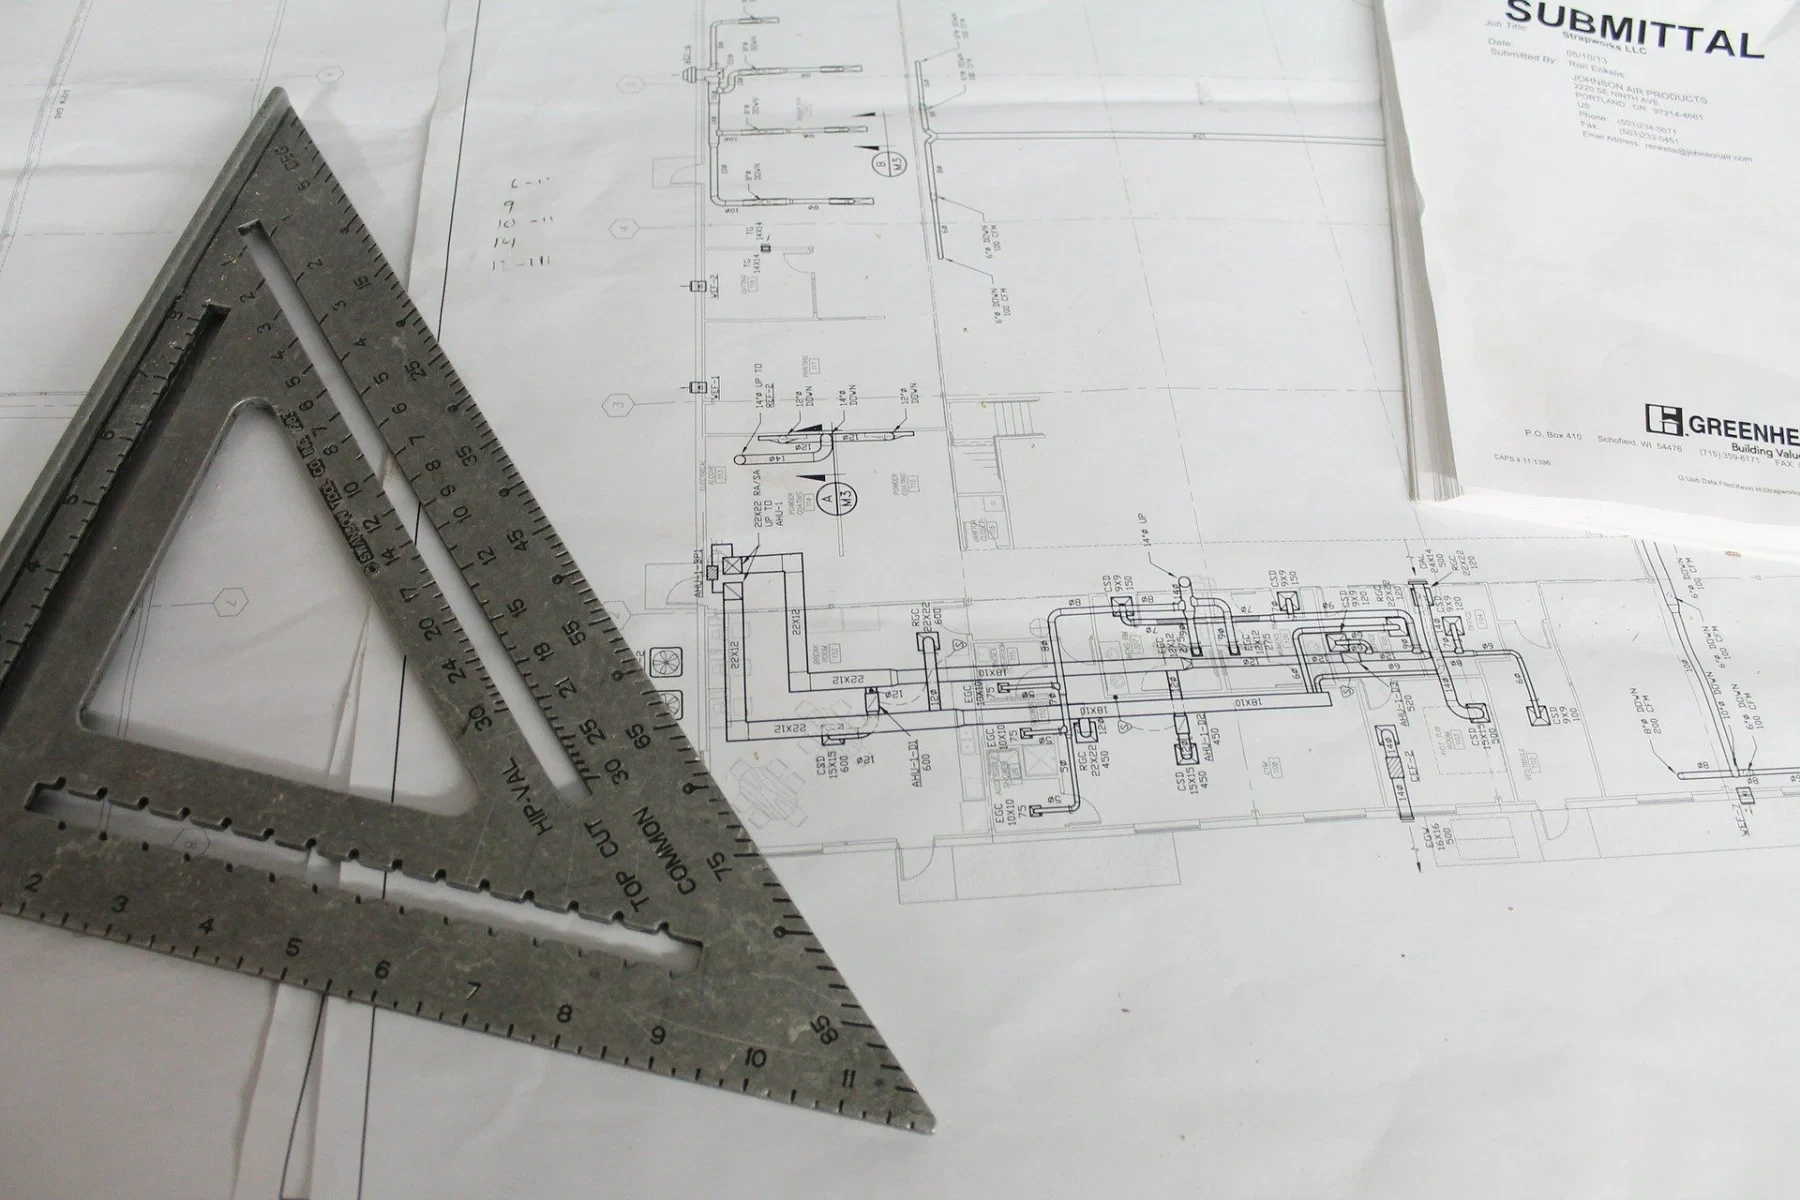 Engineering plans on sketch pad